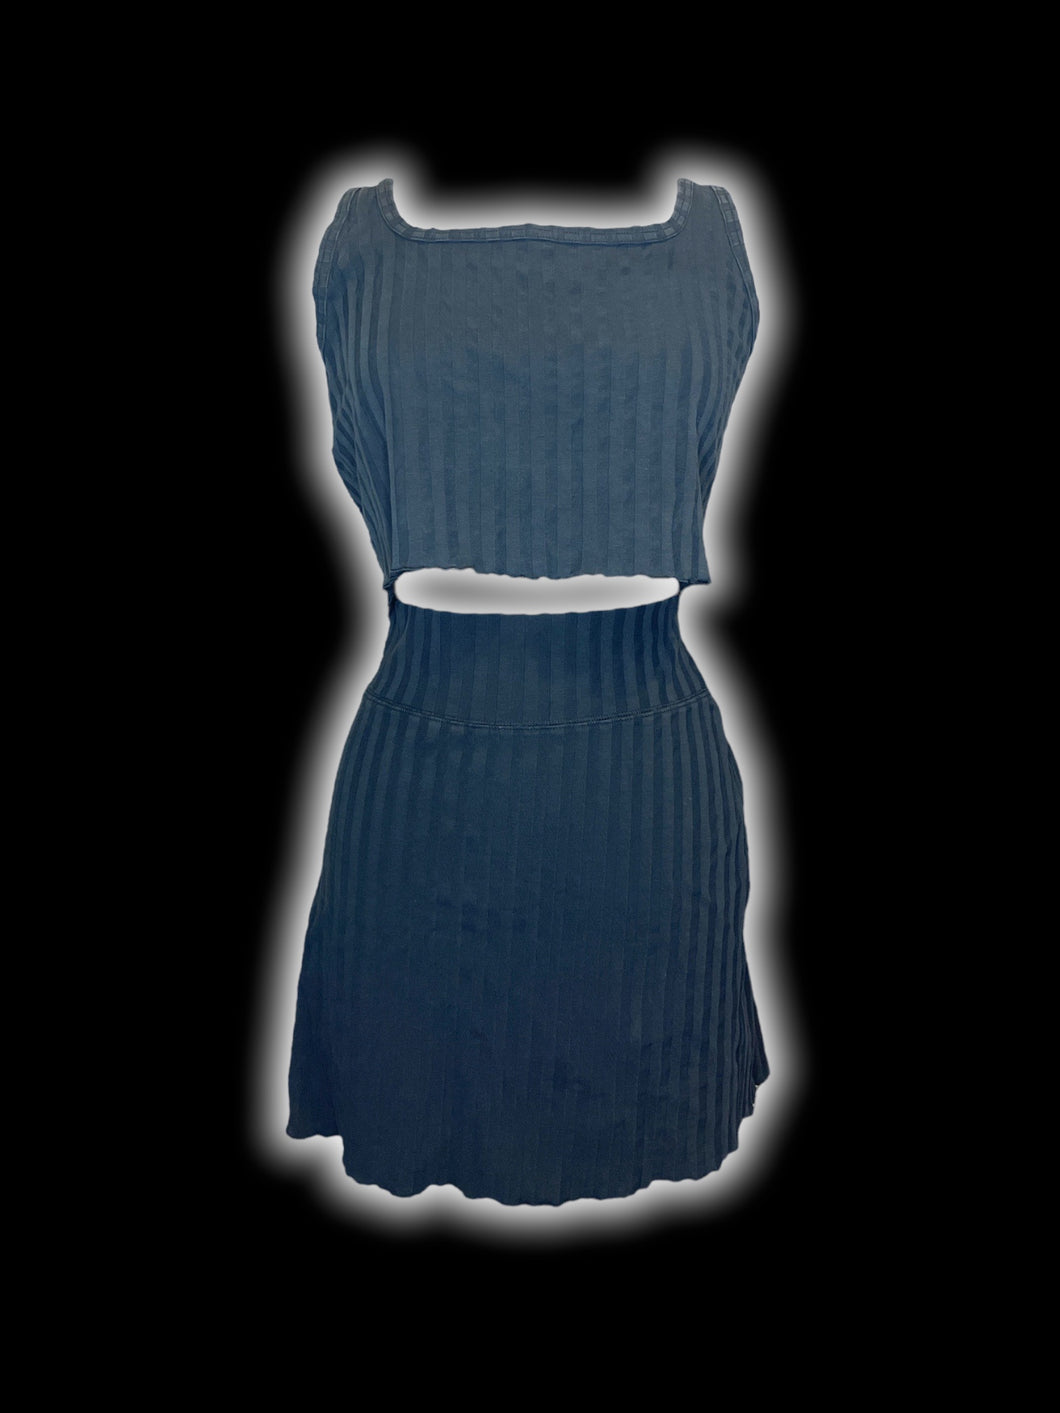 L Black scoopneck striped crop top & skirt set w/ wavy hems, & elastic waist on skirt